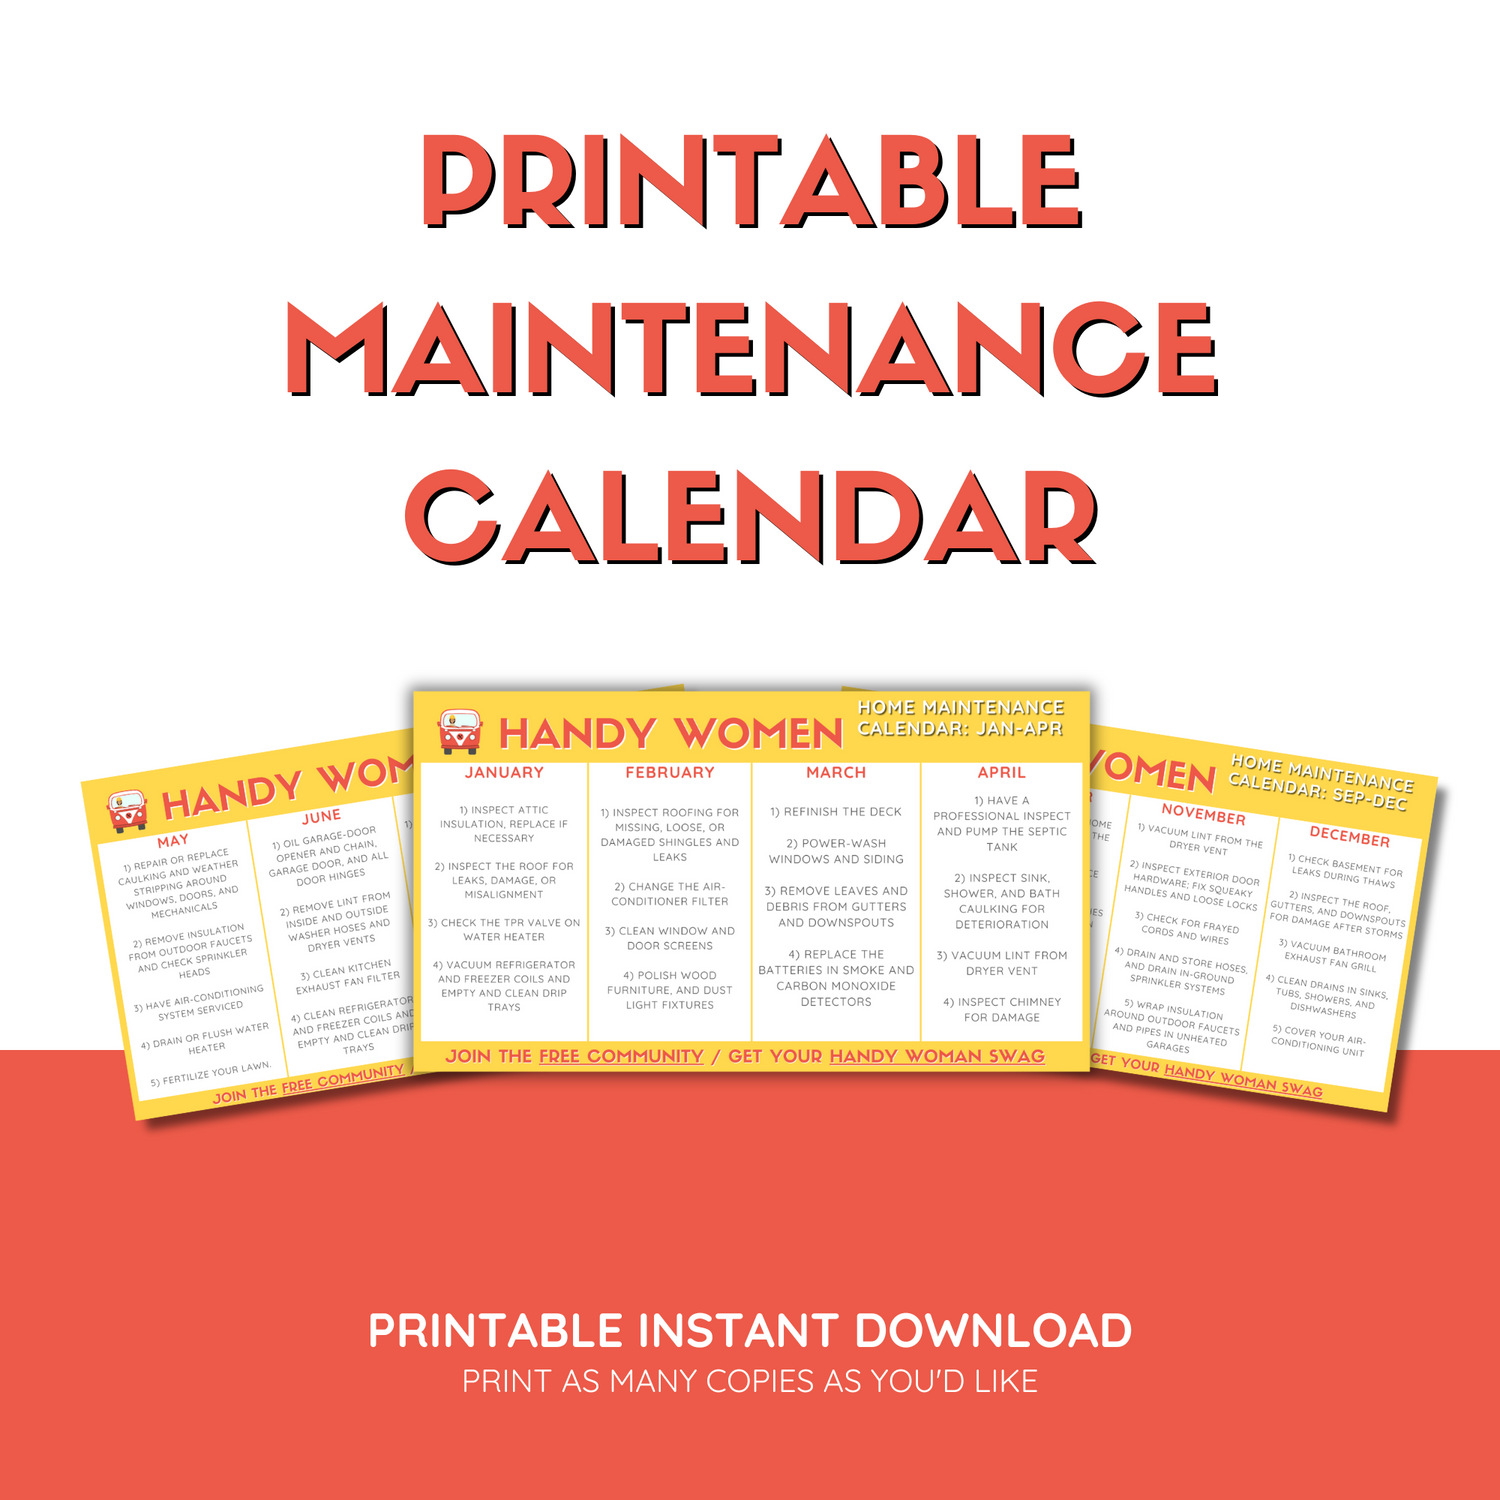 Handy Women Monthly Maintenance Calendar - DIGITAL DOWNLOAD